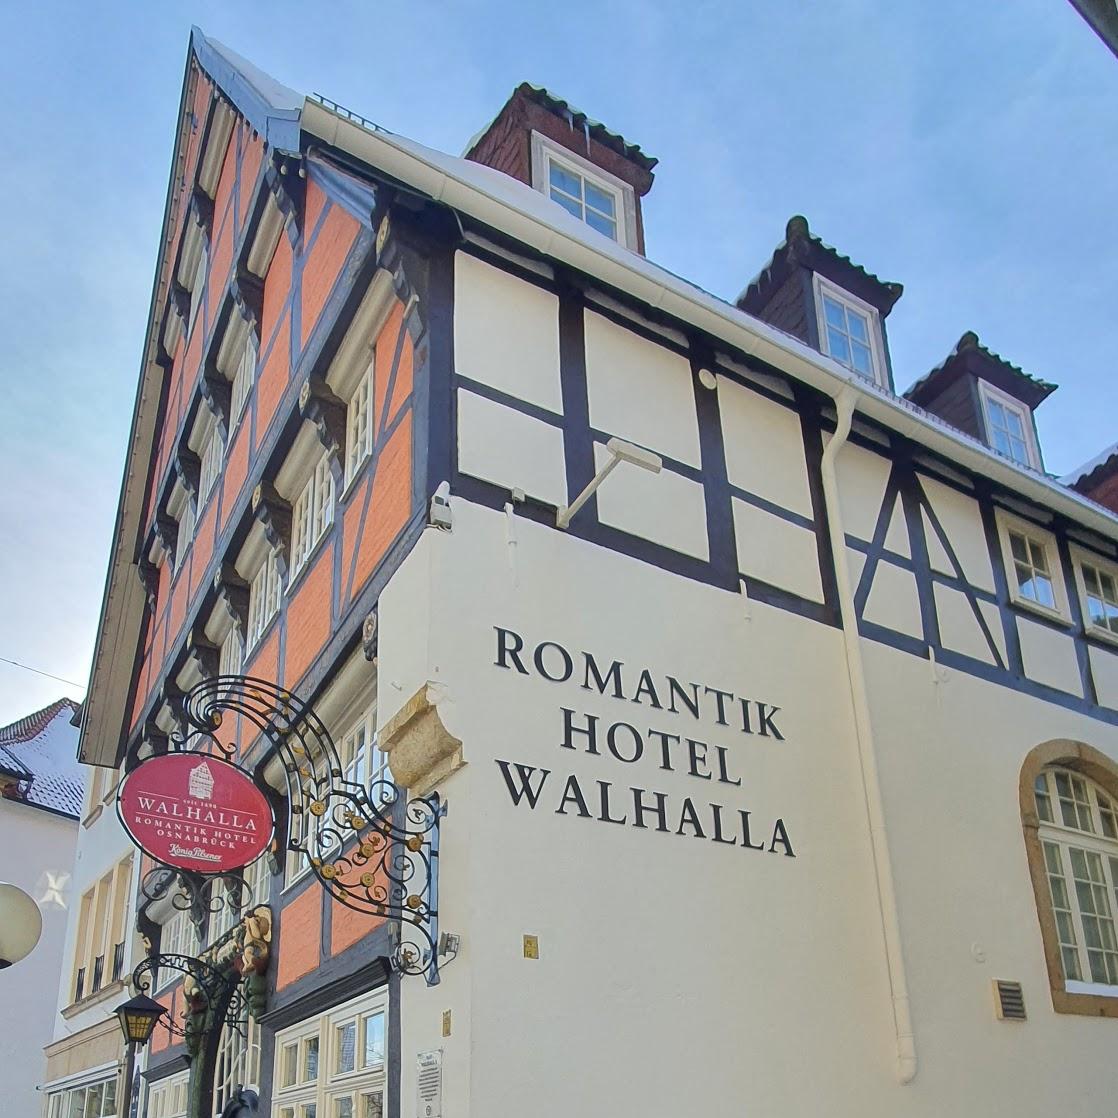 Restaurant "Romantik Restaurant Walhalla" in  Osnabrück